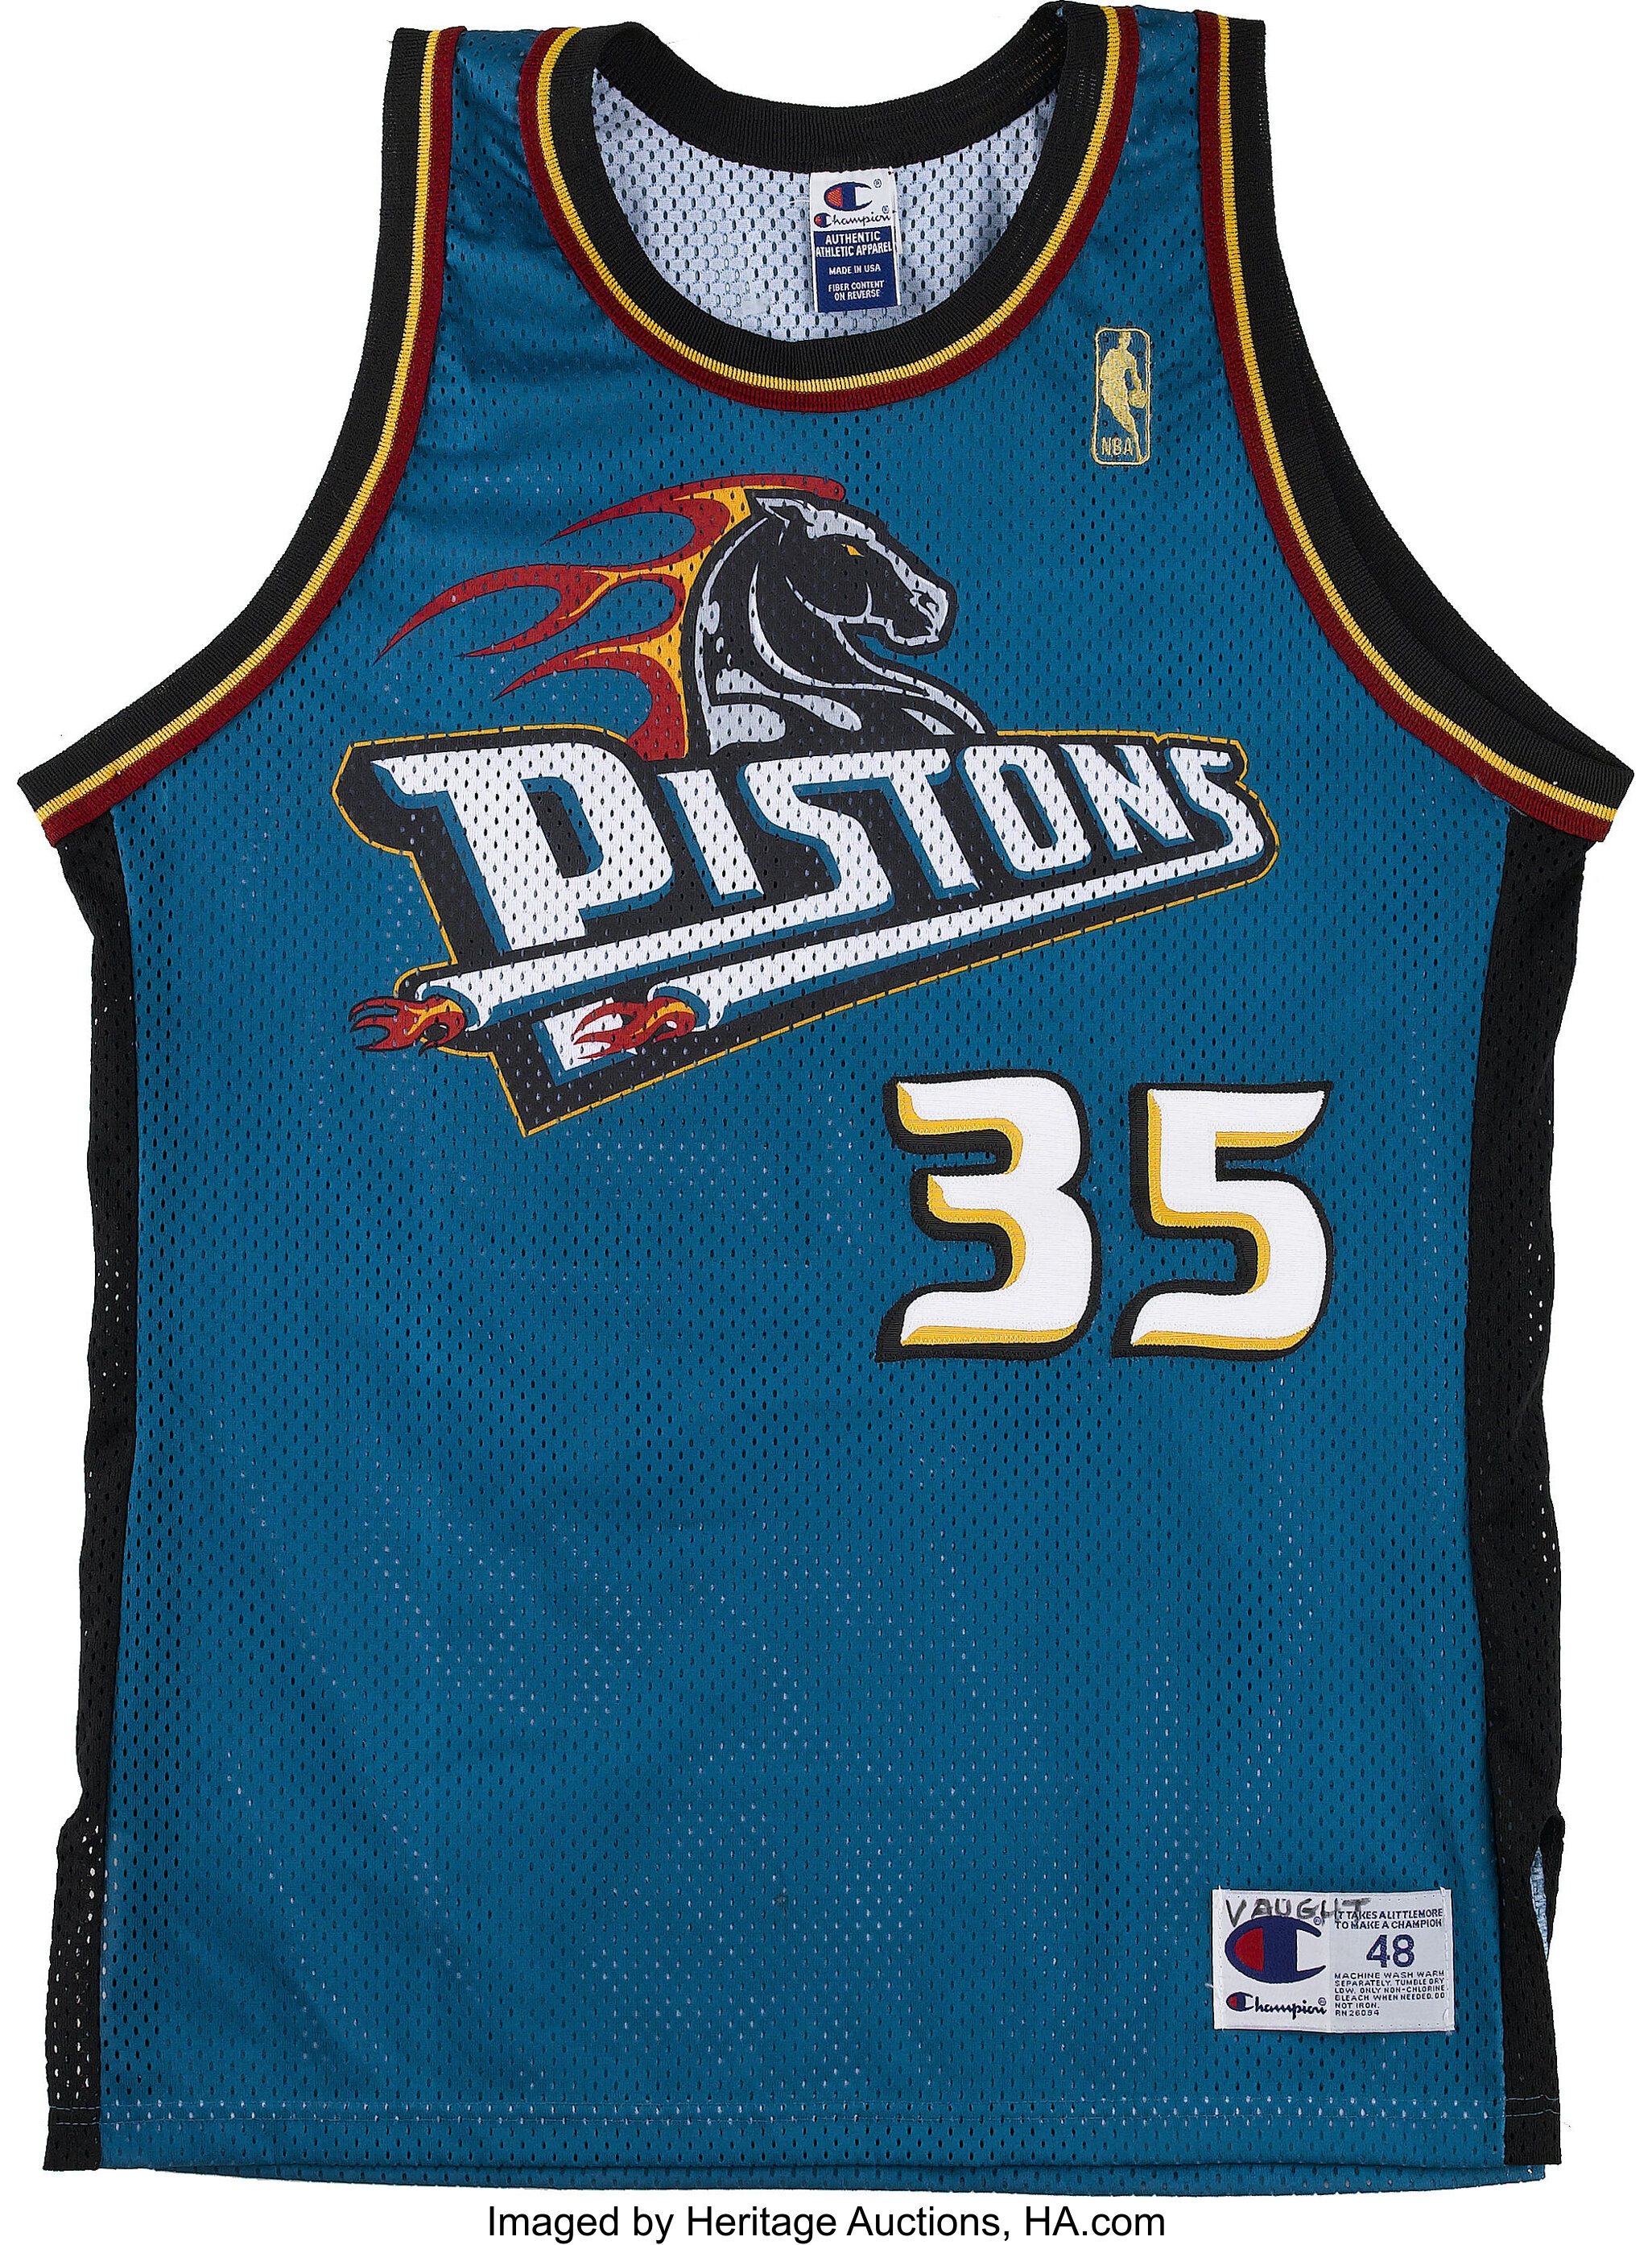 Detroit Pistons Fanatics Authentic Team-Issued Blue Don Life